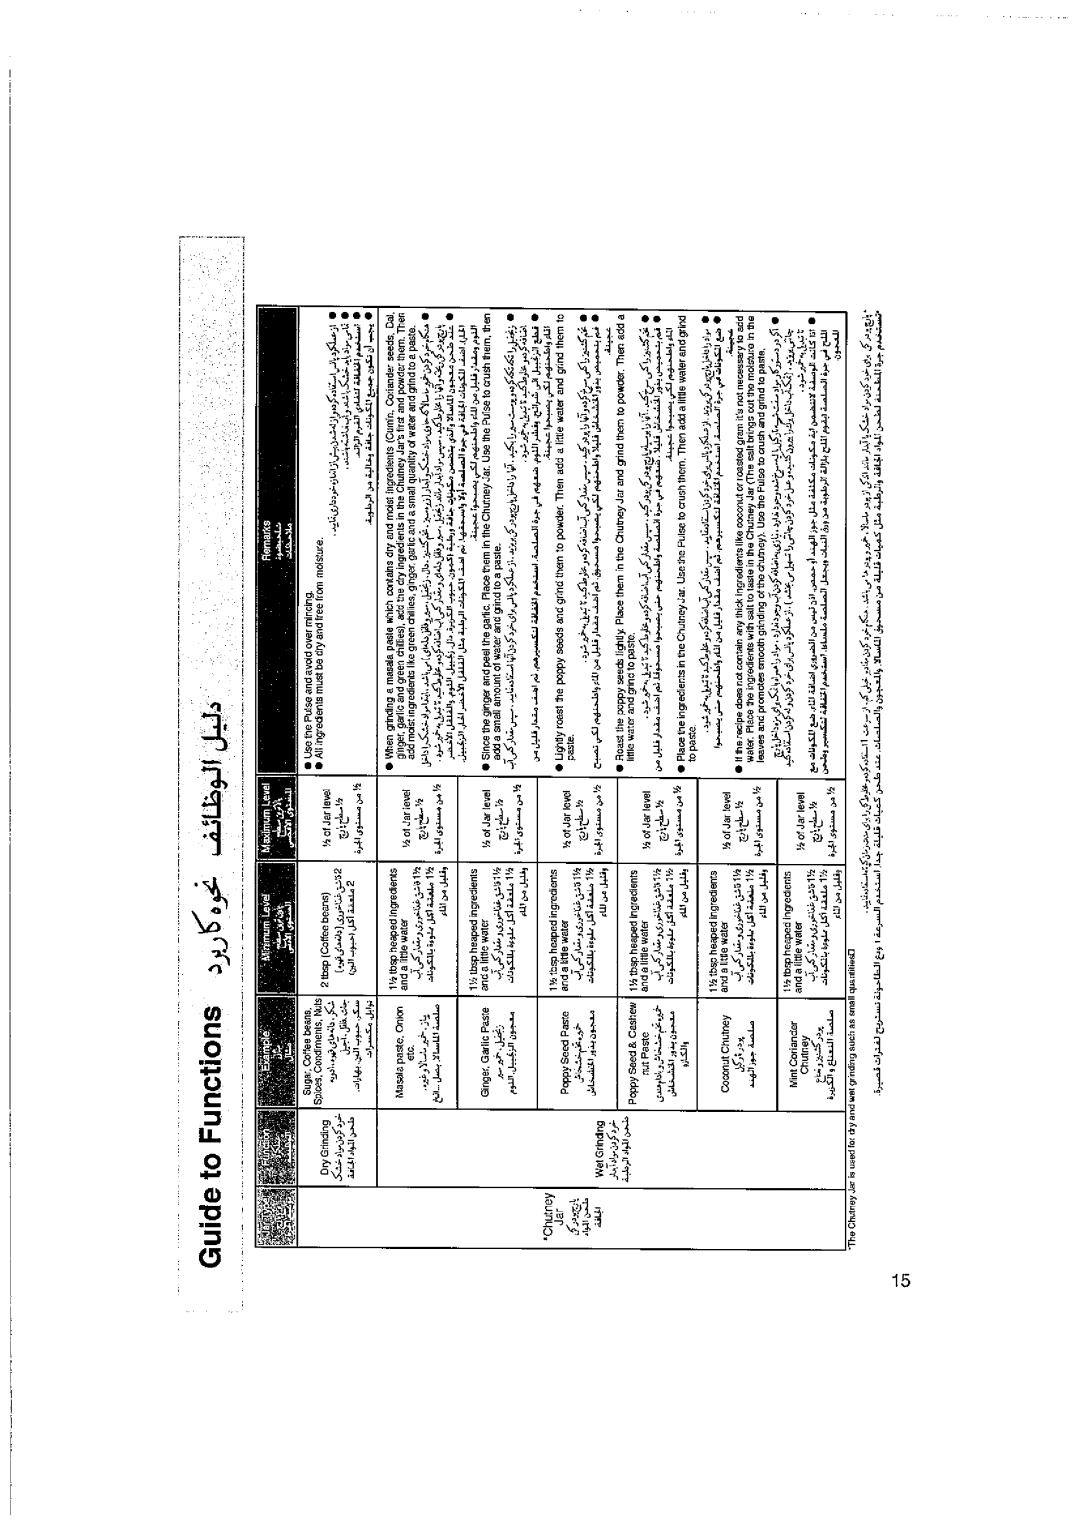 Panasonic MC-AC210S, Mx-AC400, MC-AC220, MX AC300 manual 